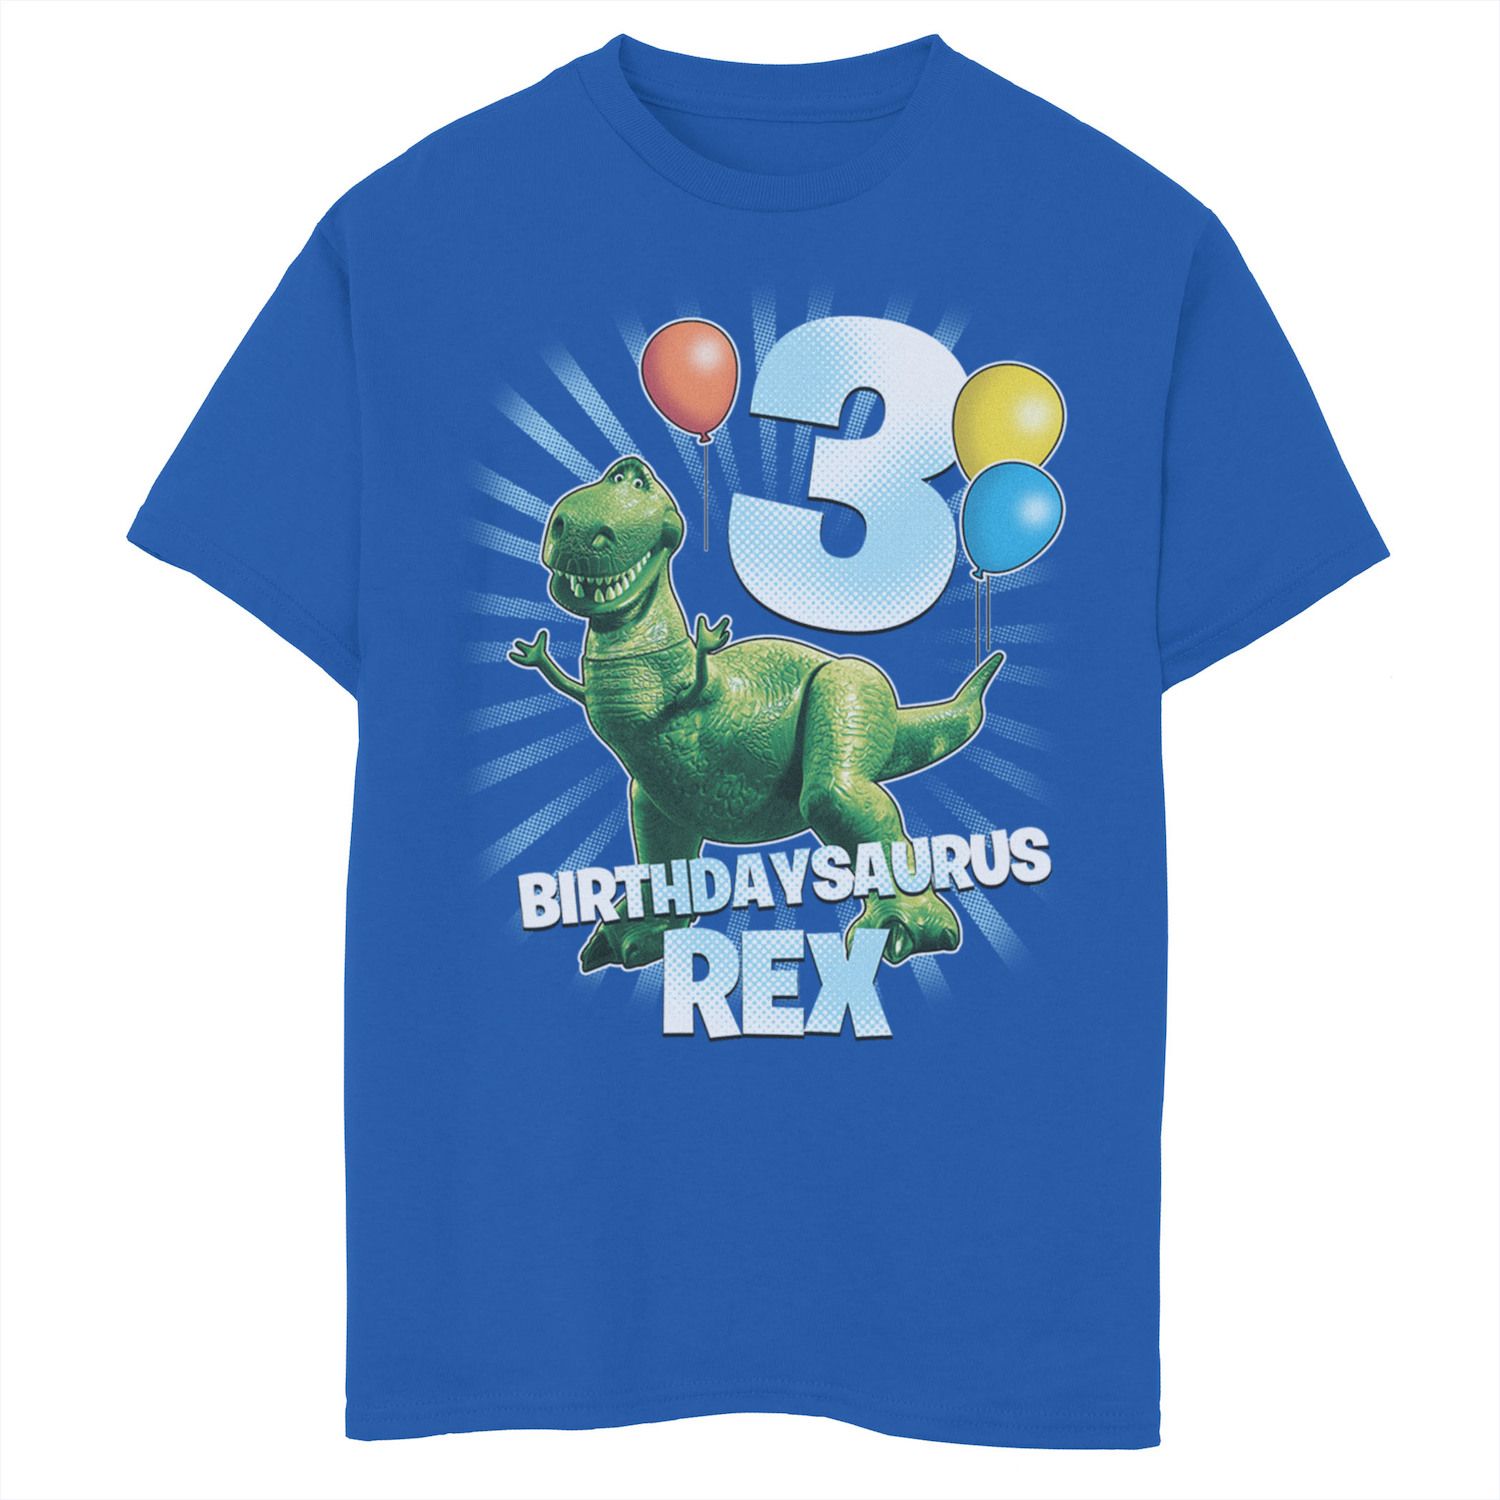 Image for Disney / Pixar Toy Story Boys 8-20 Birthdaysaurus Rex 3rd Birthday Graphic Tee at Kohl's.